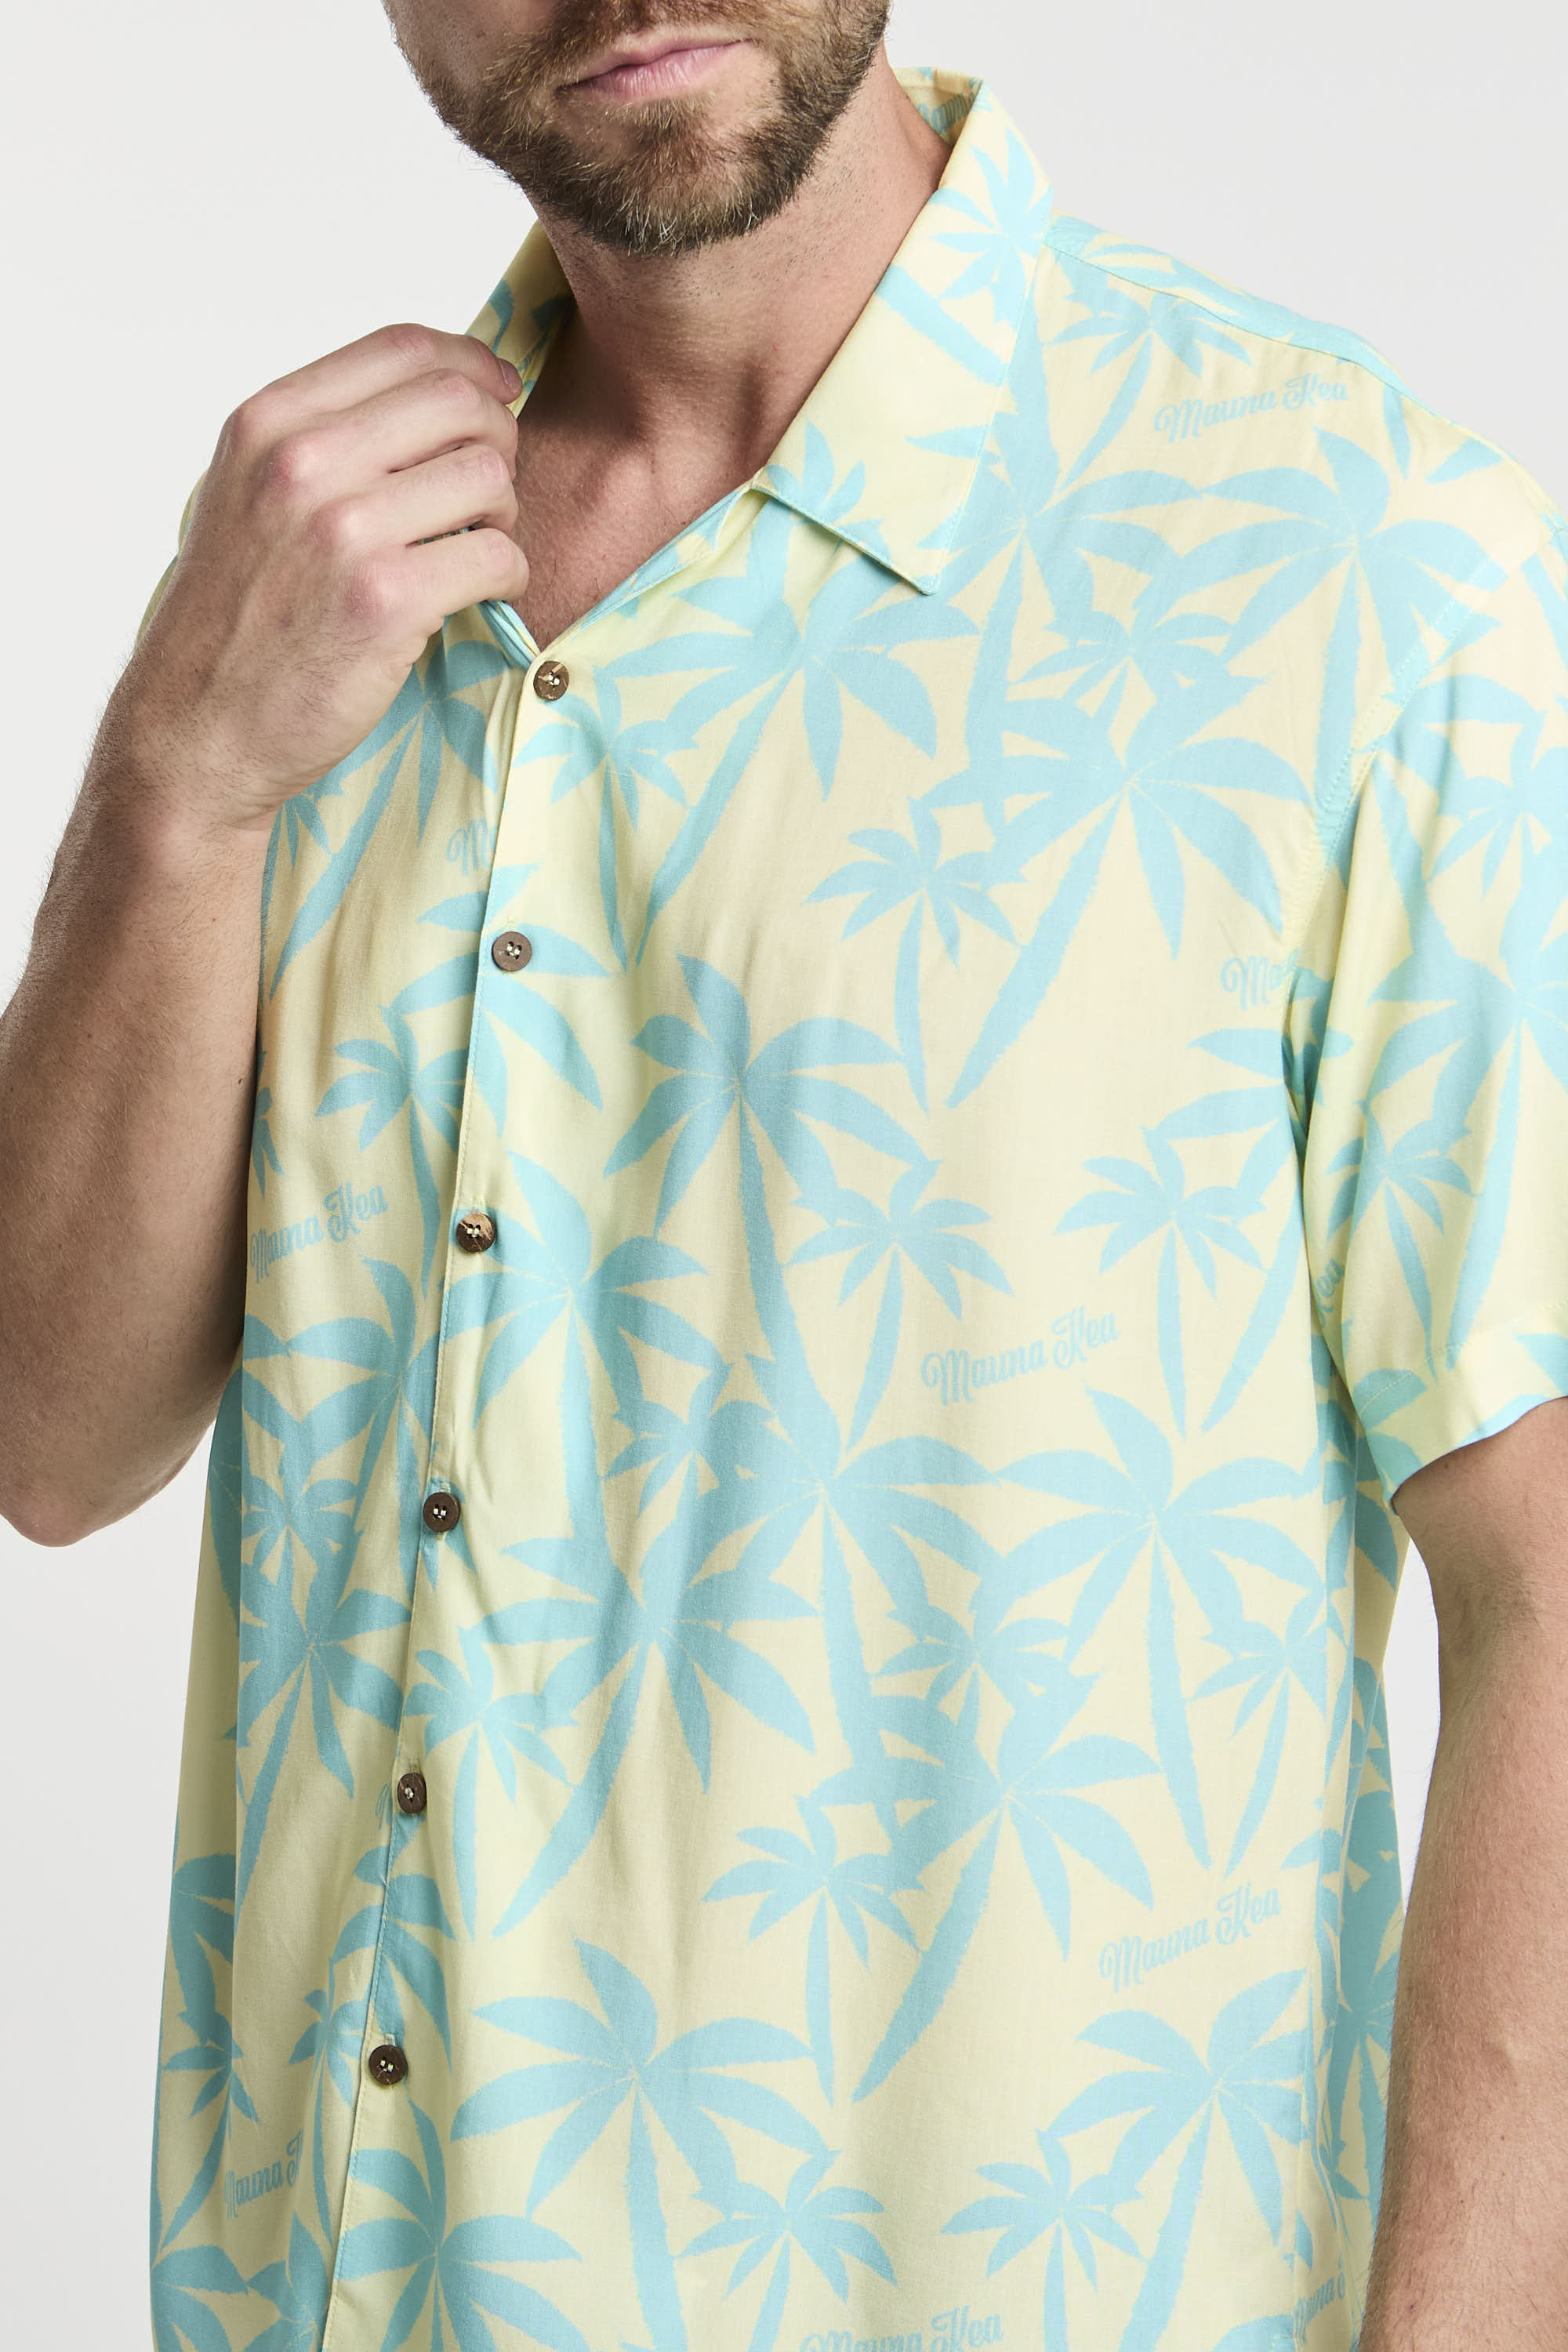 Mauna Kea Printed All Over Viscose Shirt in Yellow-5